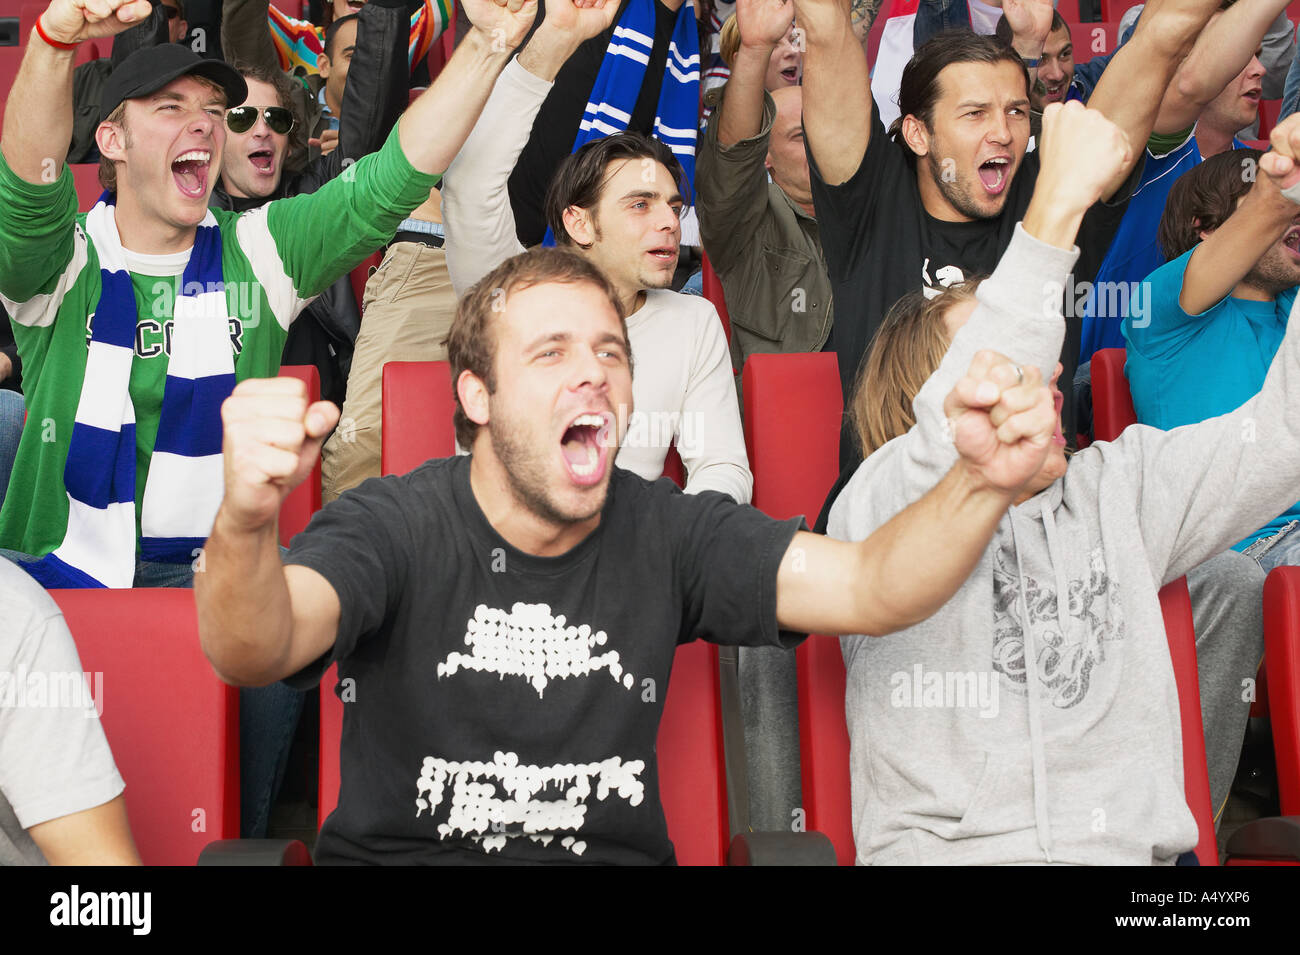 football-crowd-cheering-A4YXP6.jpg